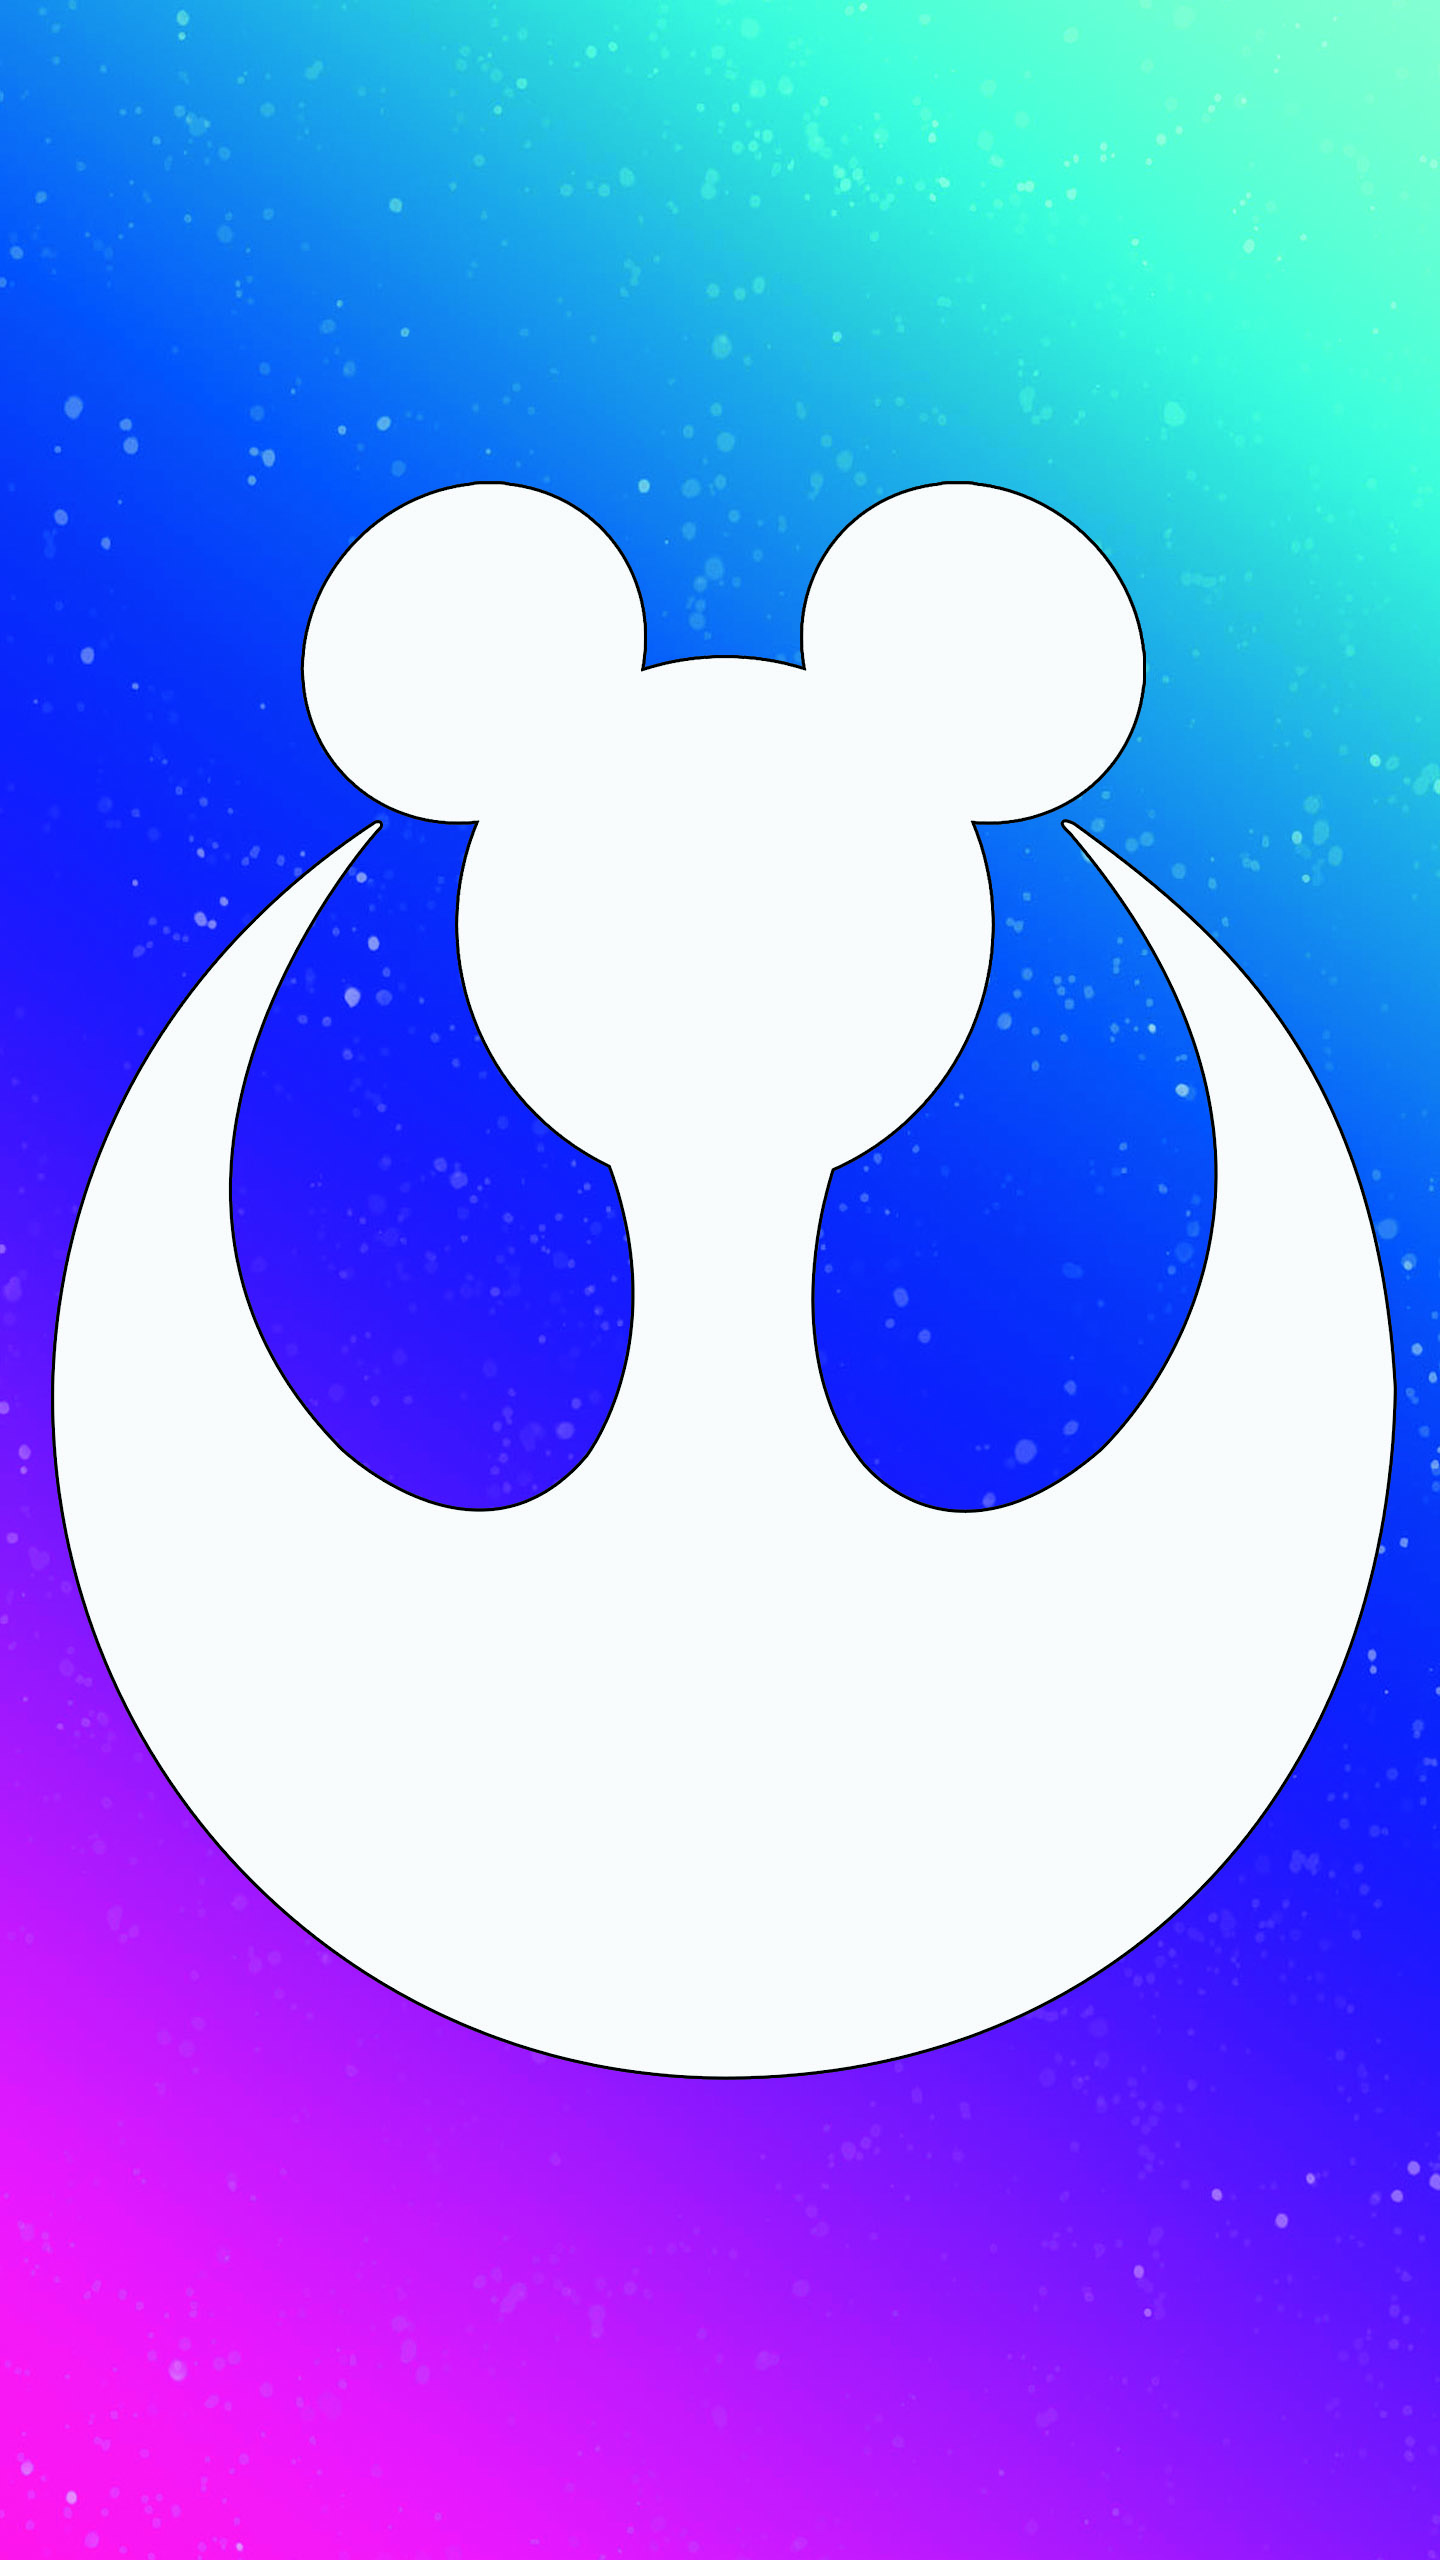 Disney Star Wars Wallpapers